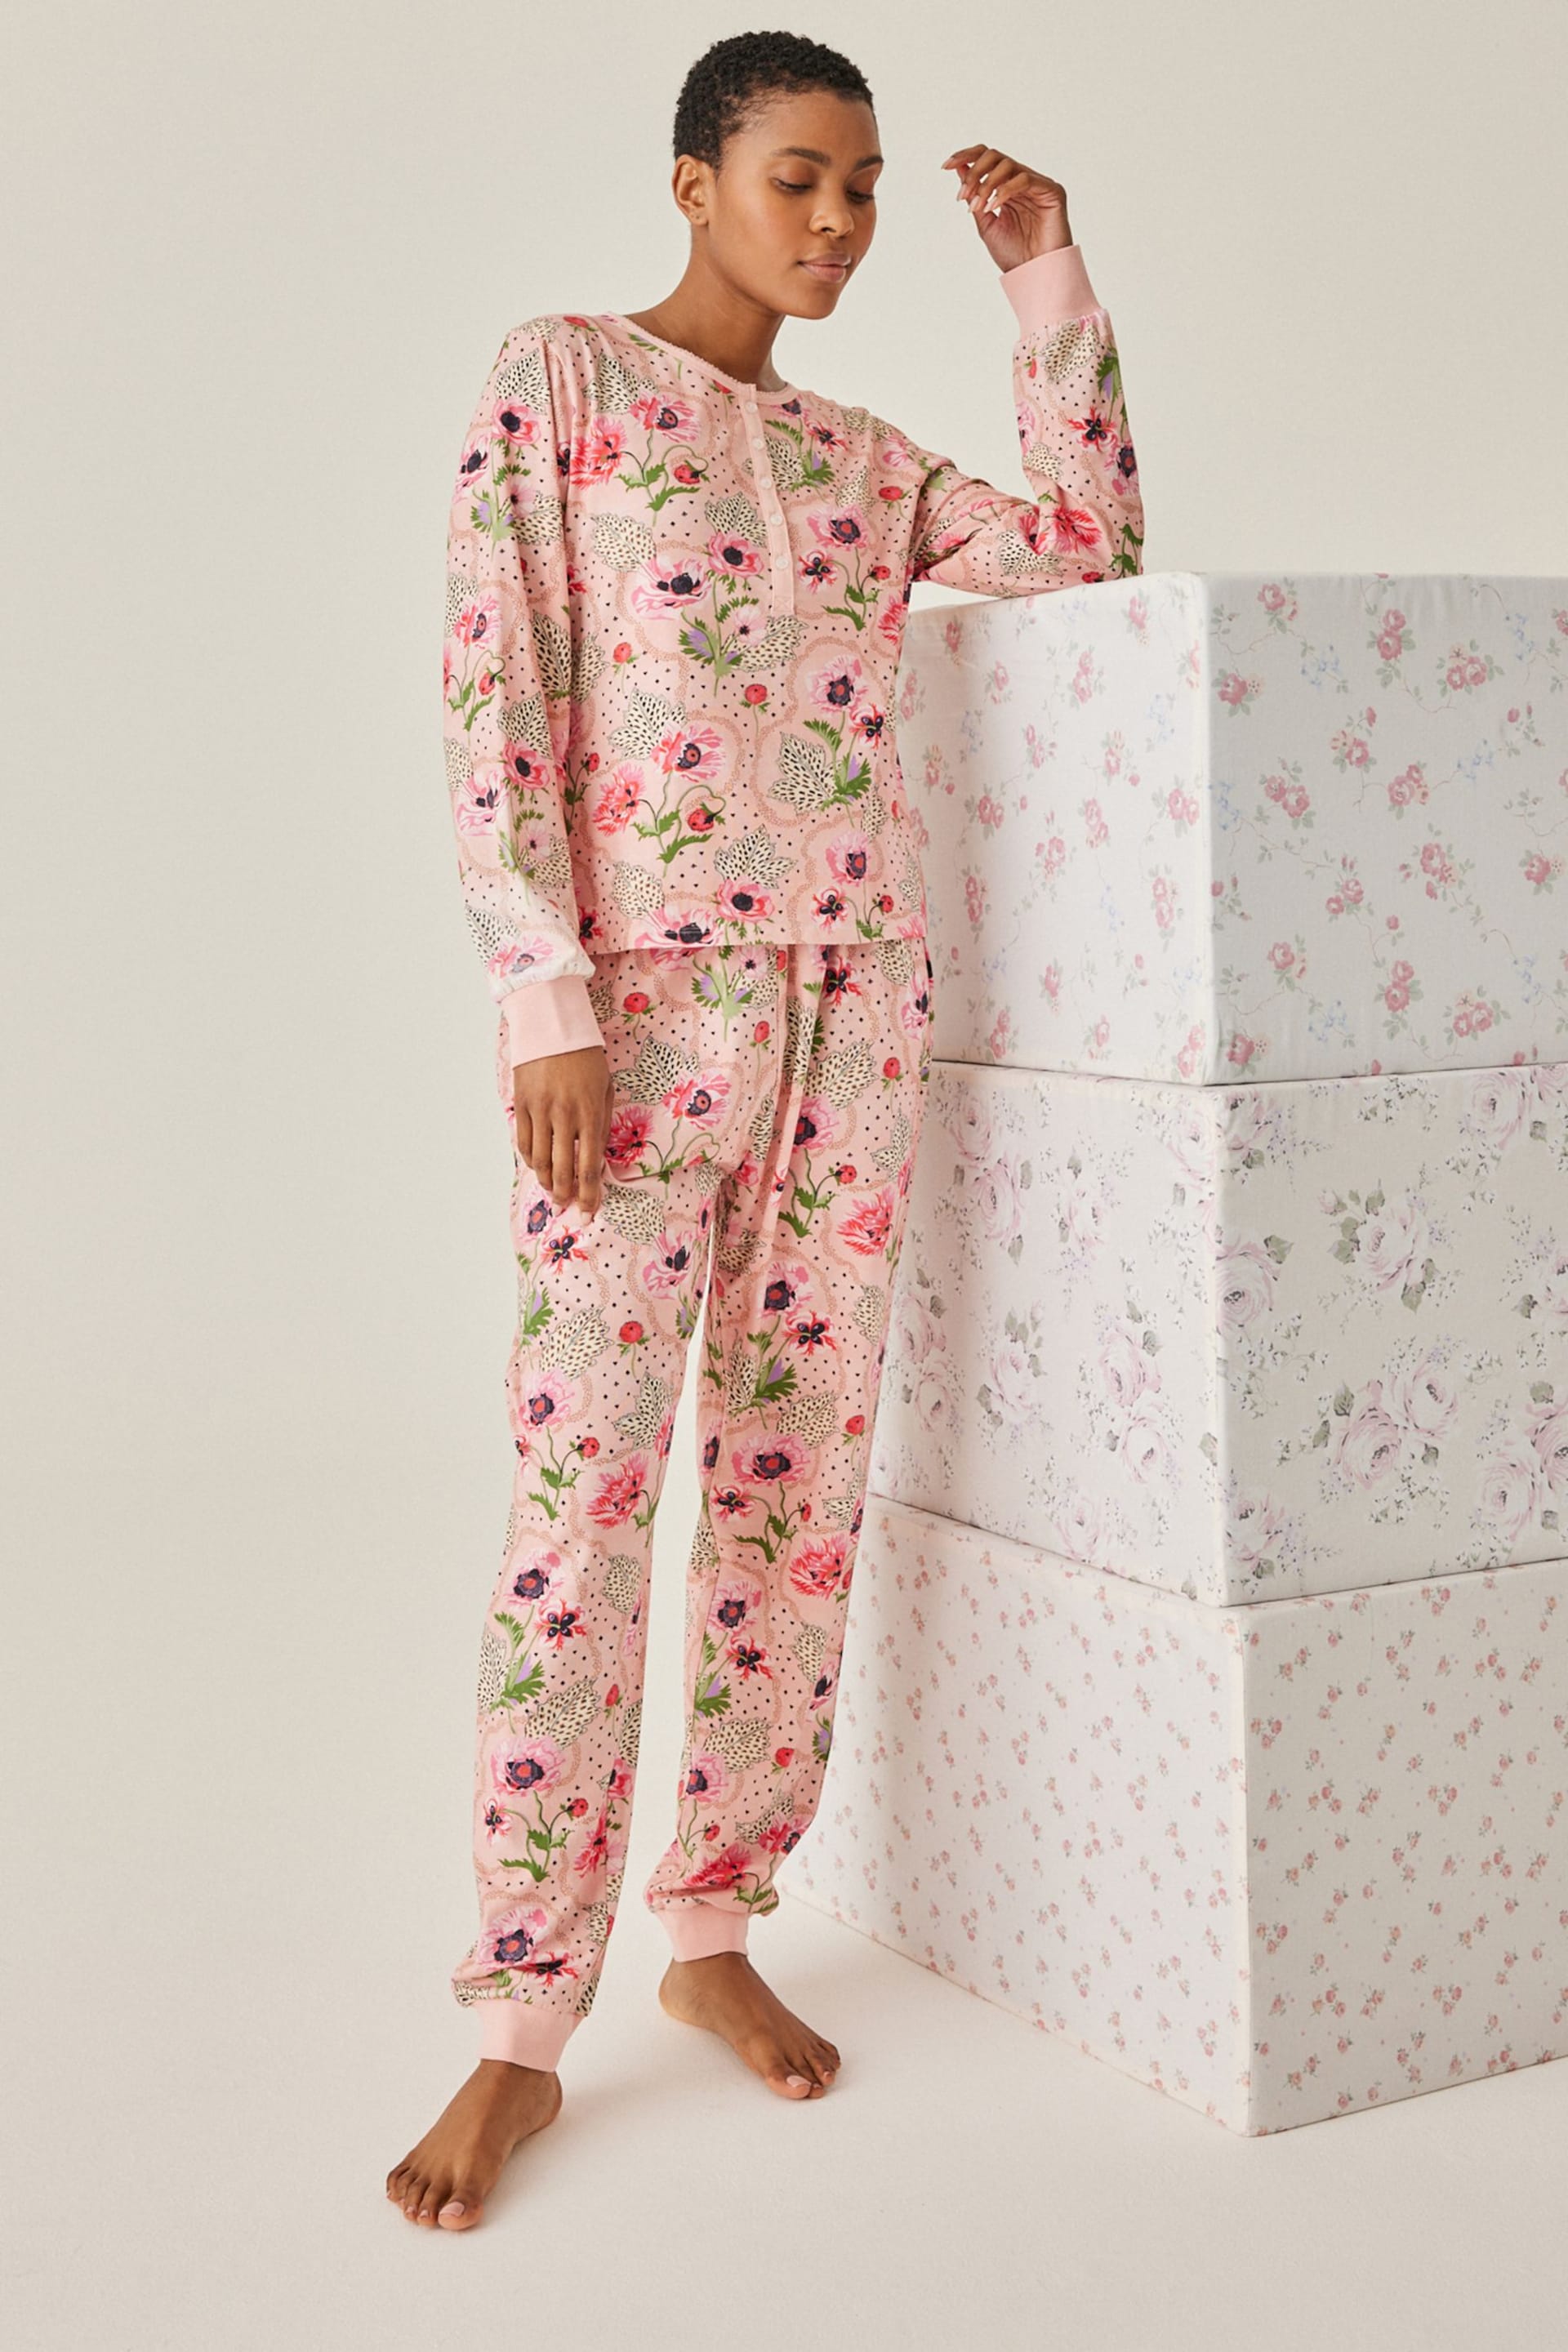 Cath Kidston Pink Floral Print Cotton Henley Pyjamas - Image 1 of 12